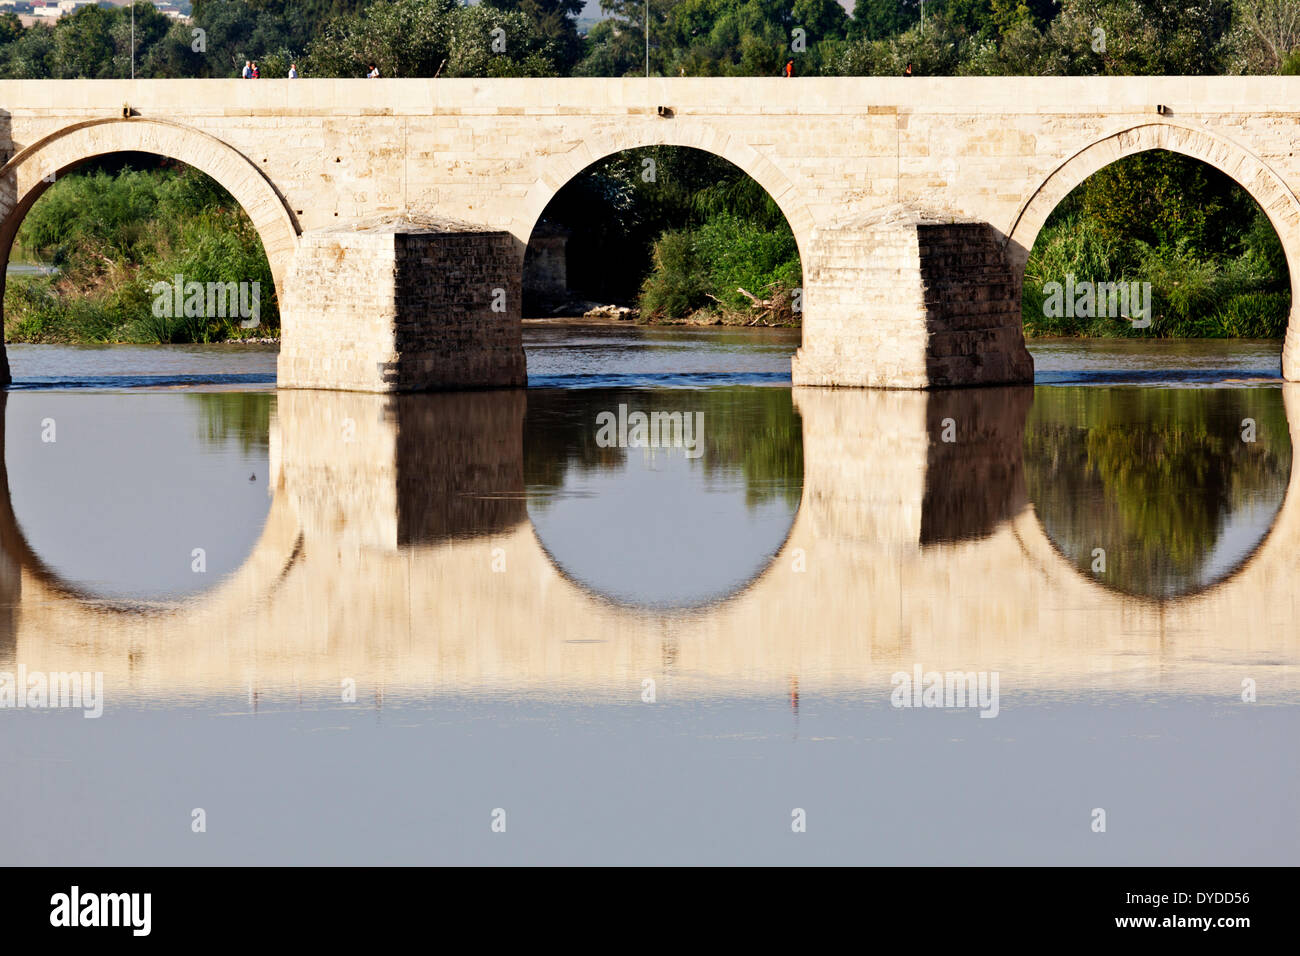 The Roman Bridge which spans the Guadalquivir river in Cordoba. Stock Photo